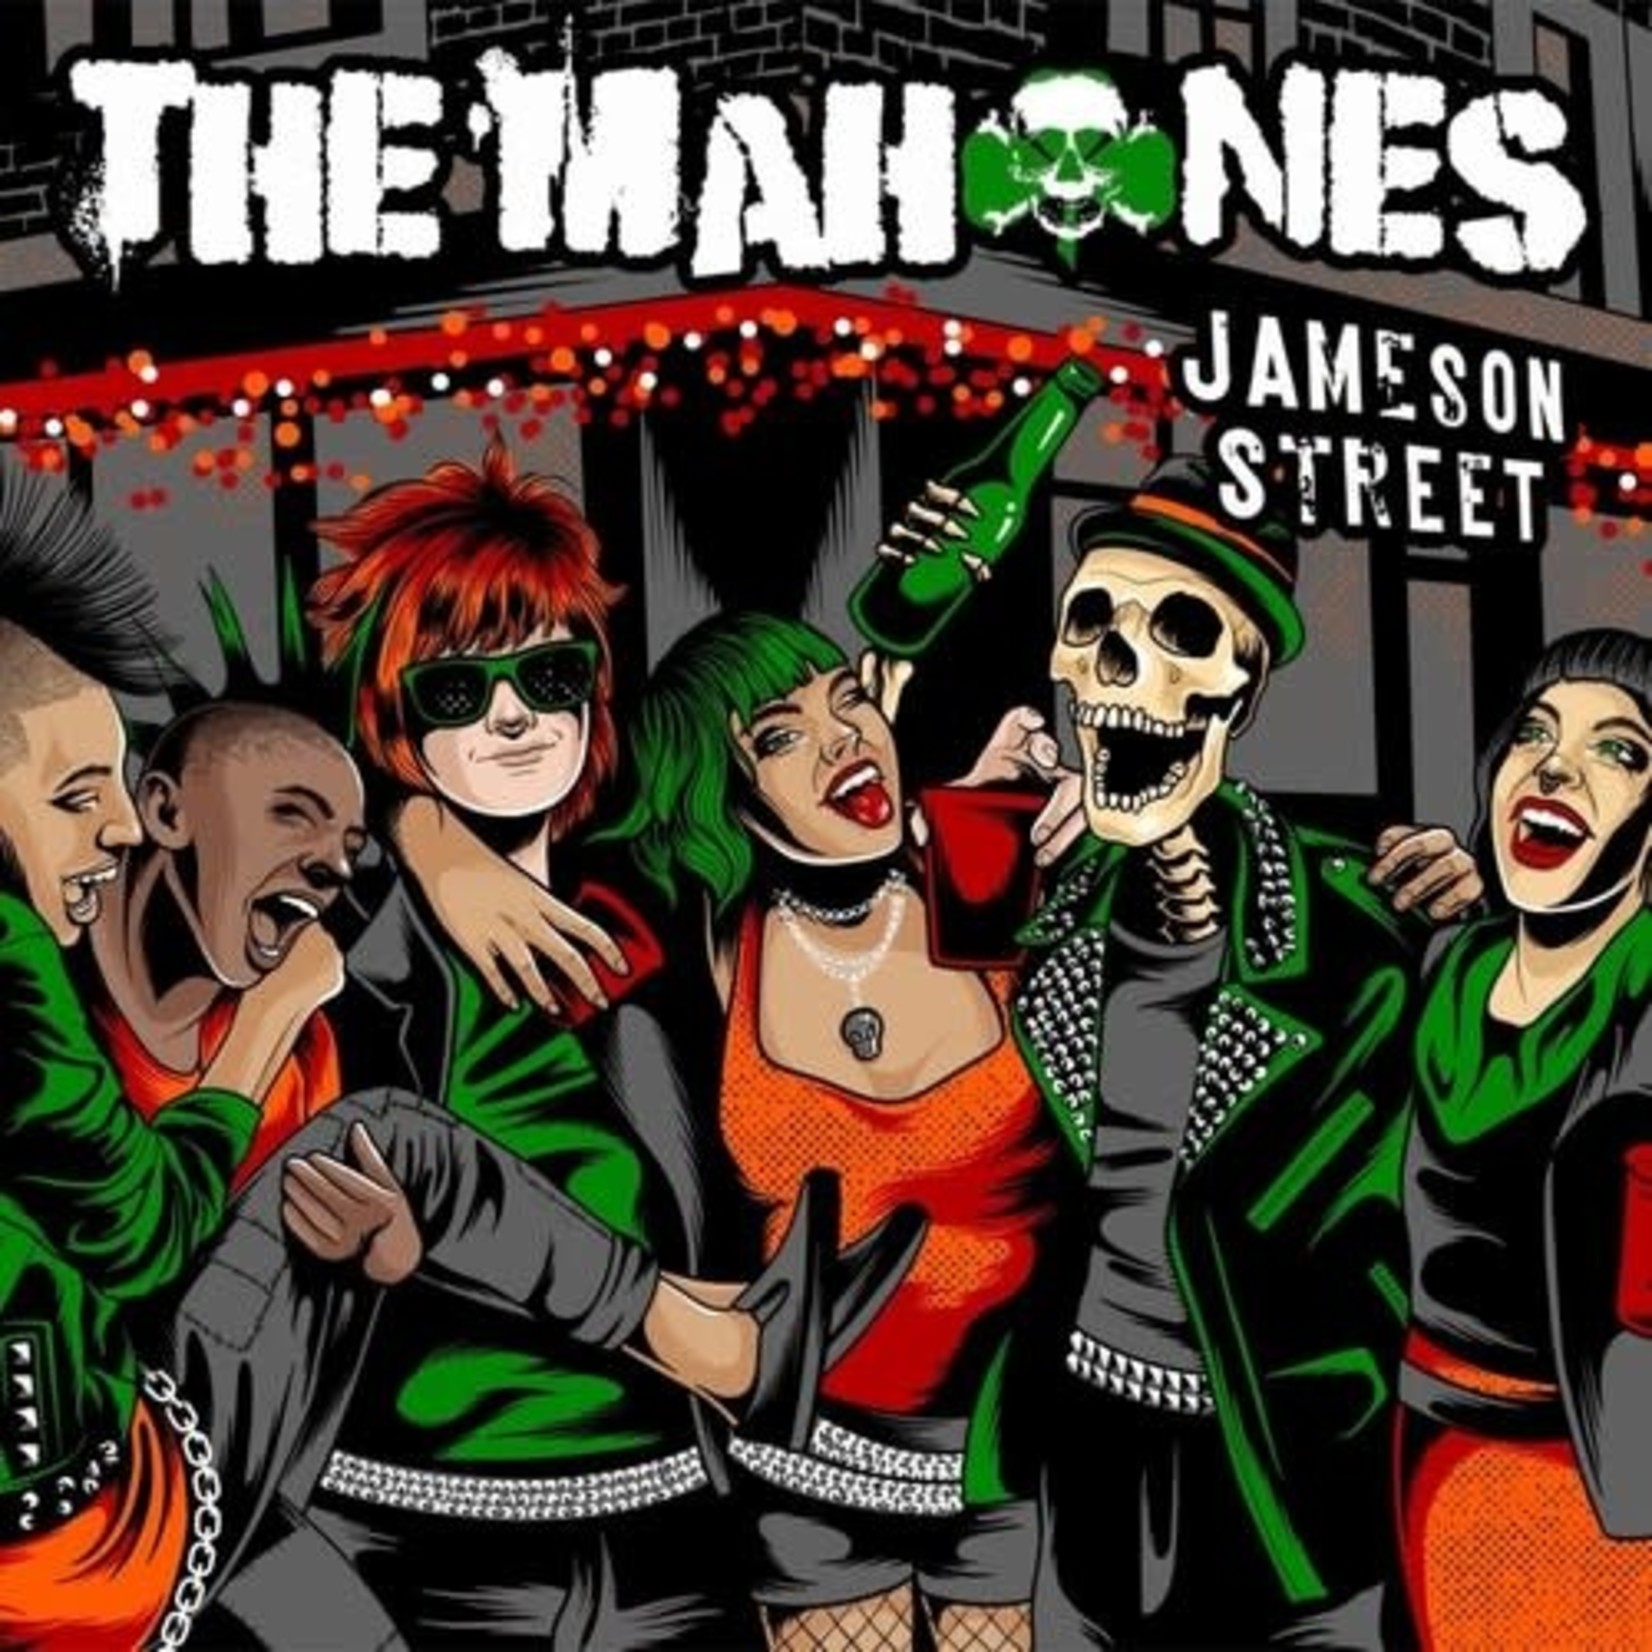 Mahones - Jameson Street [CD]